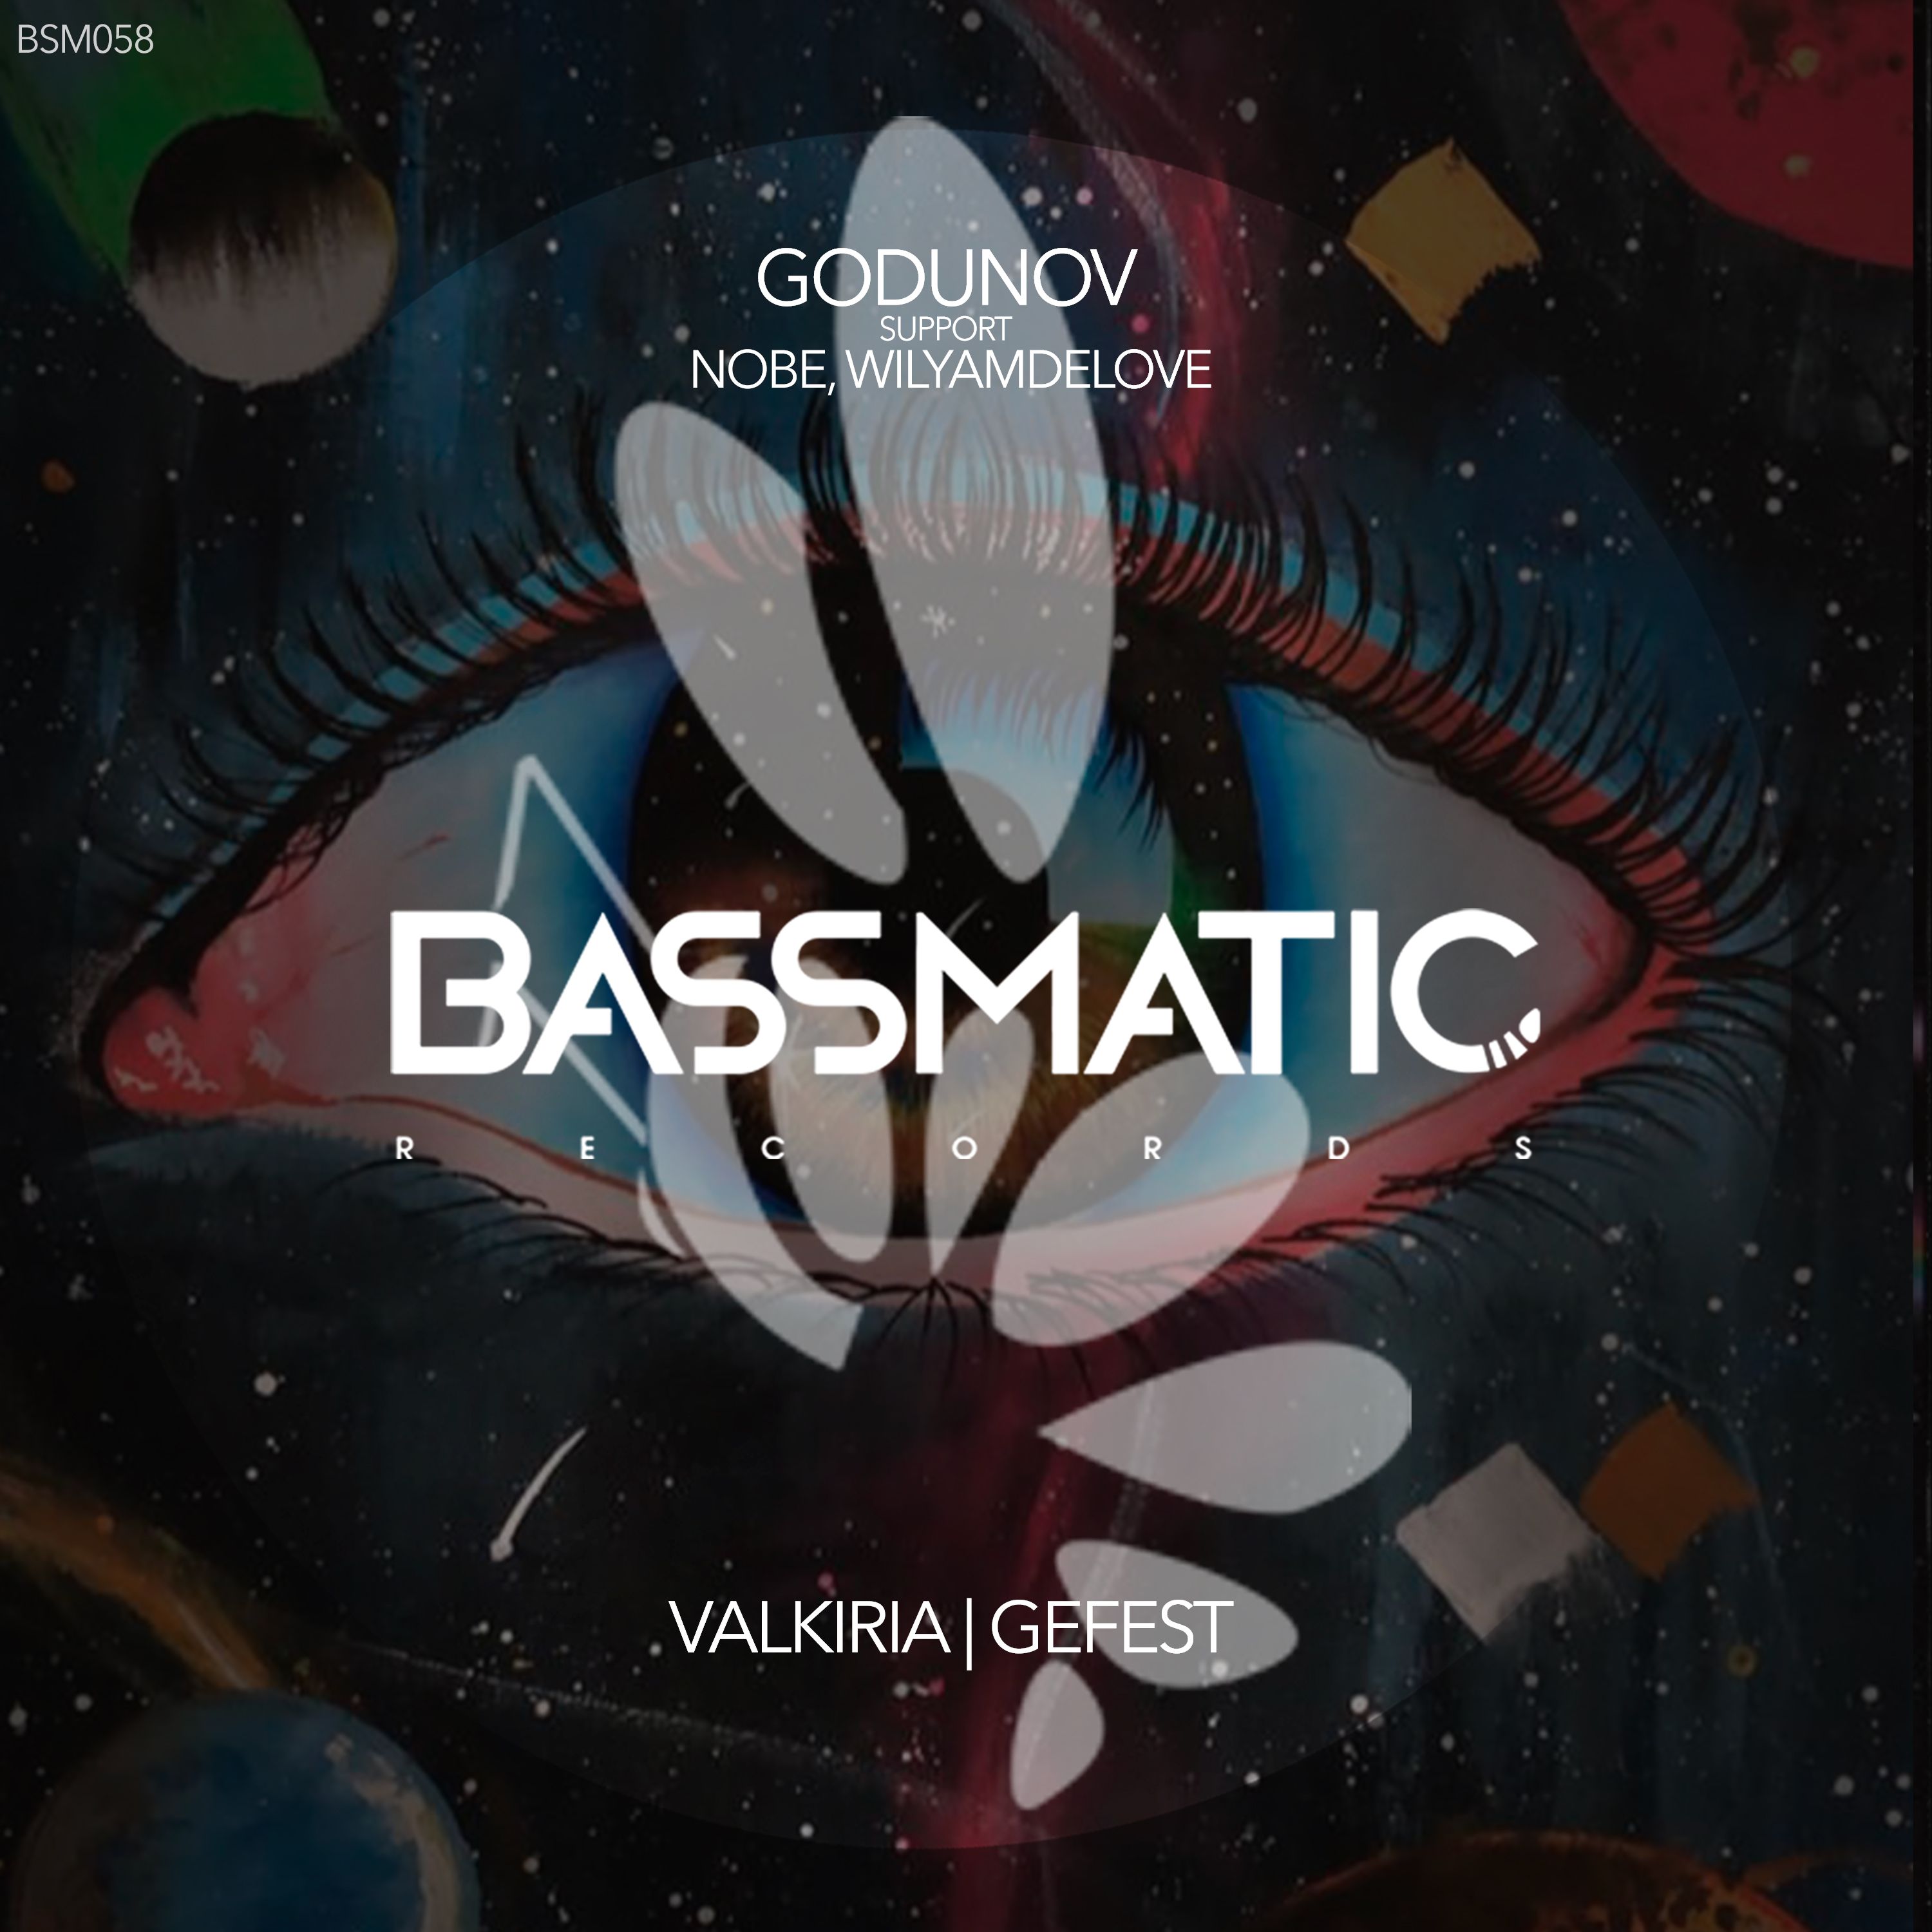 डाउनलोड करा Godunov, Nobe - Valkiria (Oiginal Mix) | Bassmatic Records